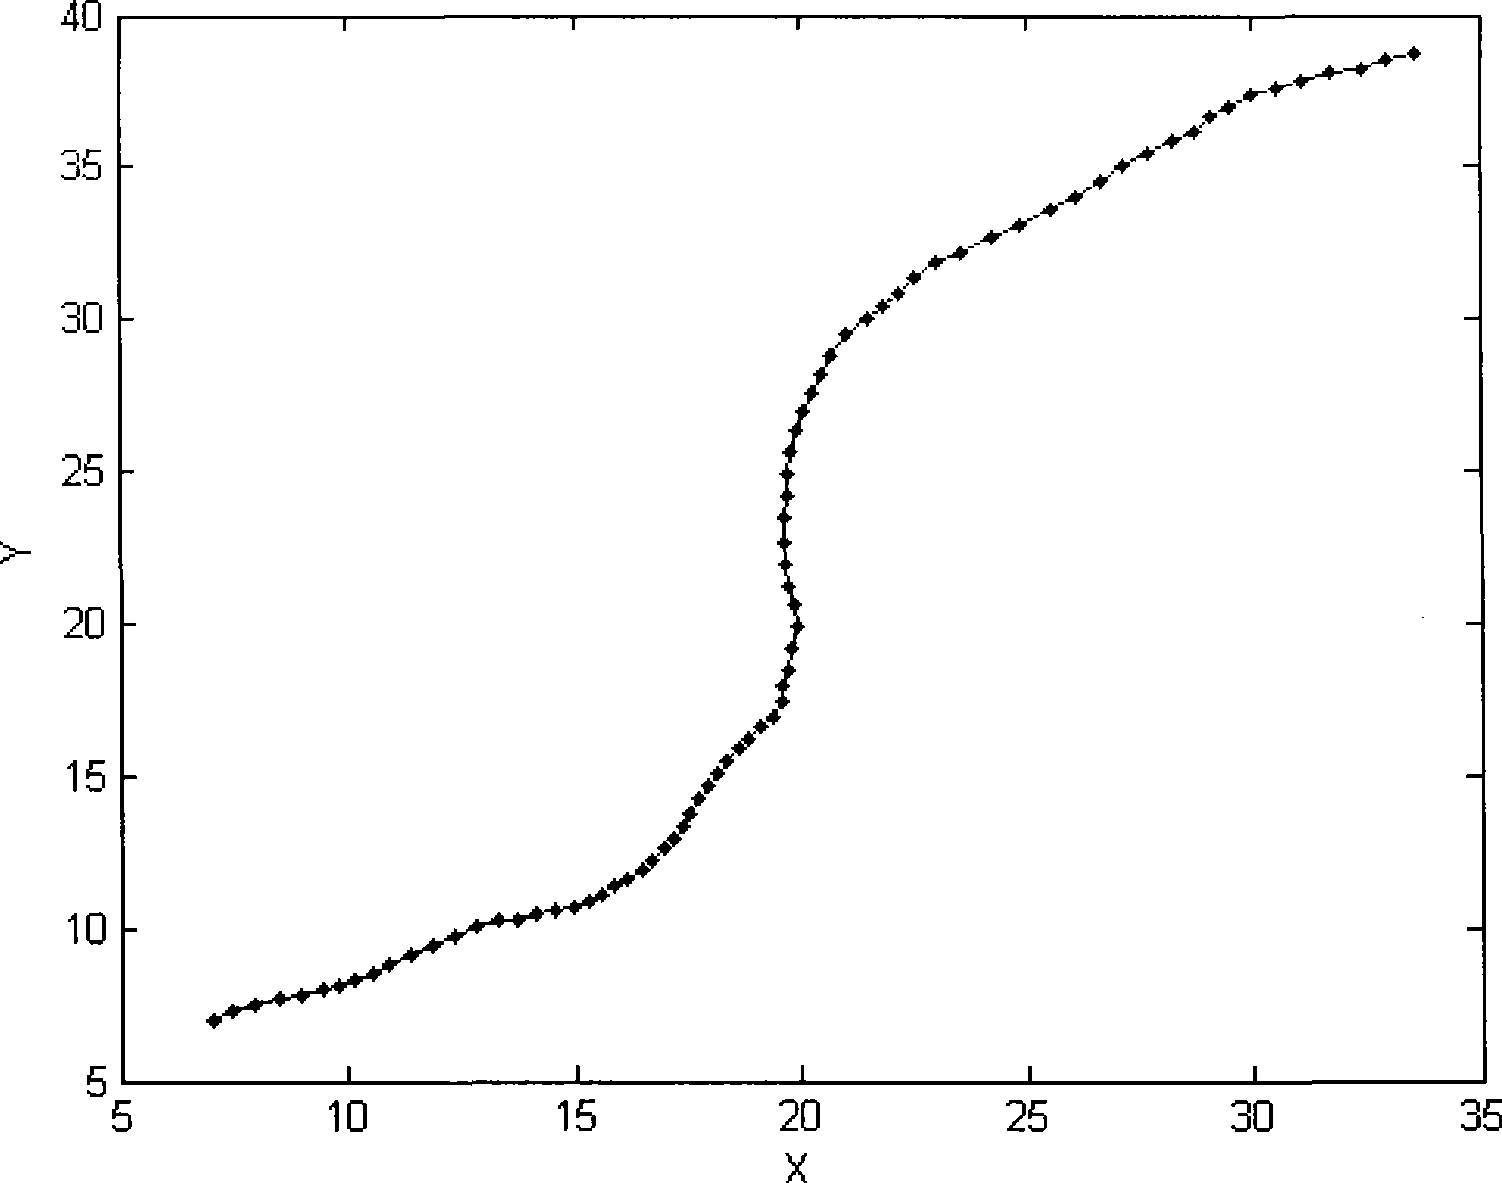 Paralleling gauss particle filtering method based on quasi-Monte Carlo sampling